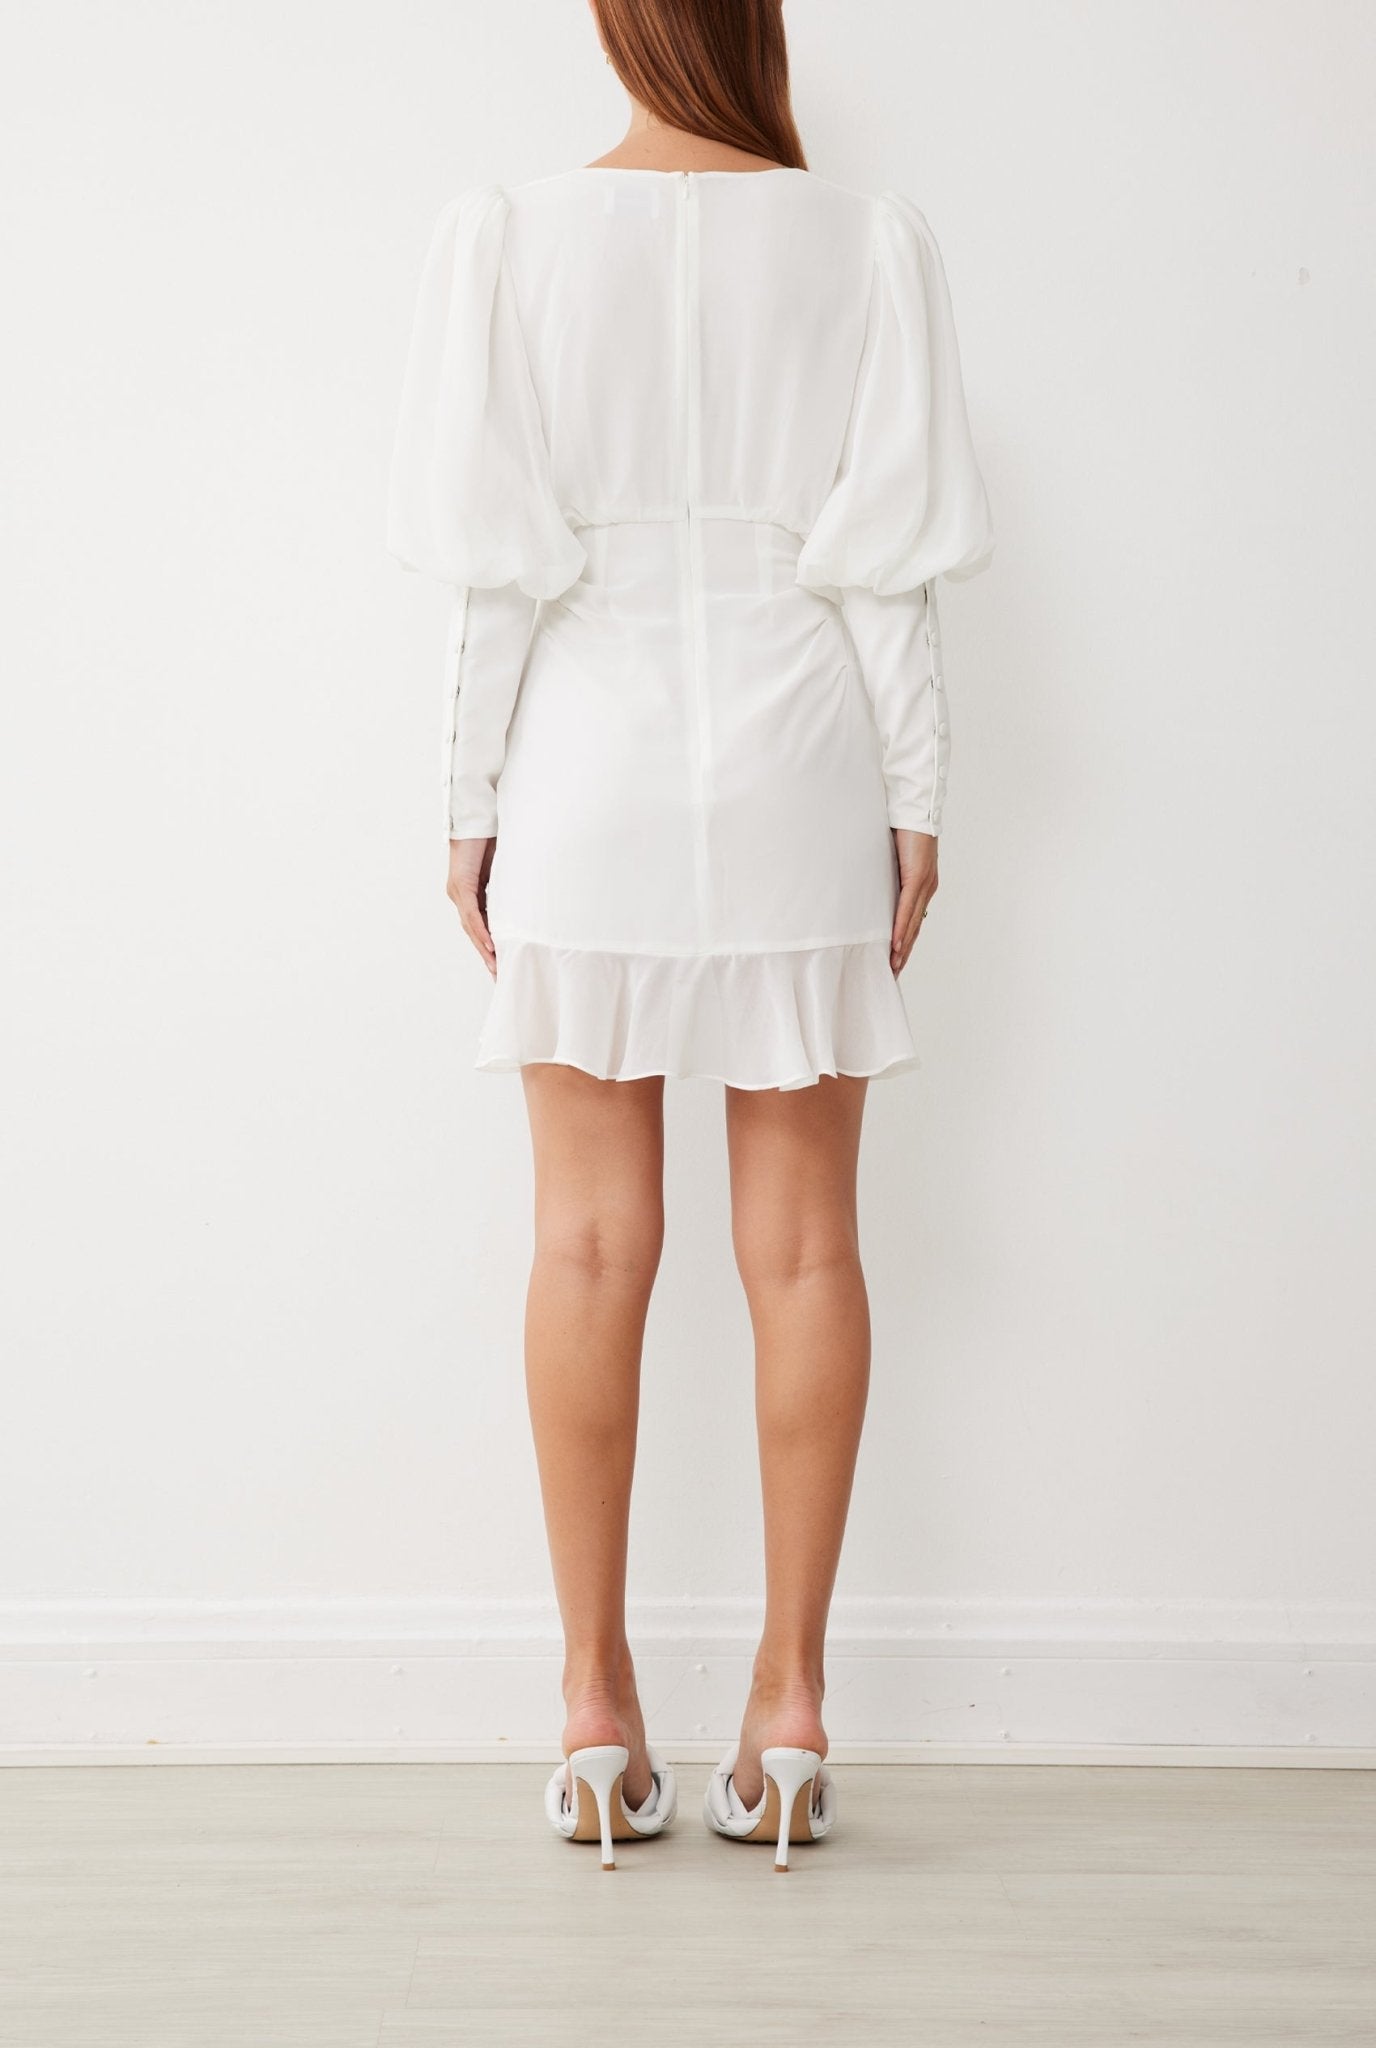 Tamar LS Dress in White - BOSKEMPER